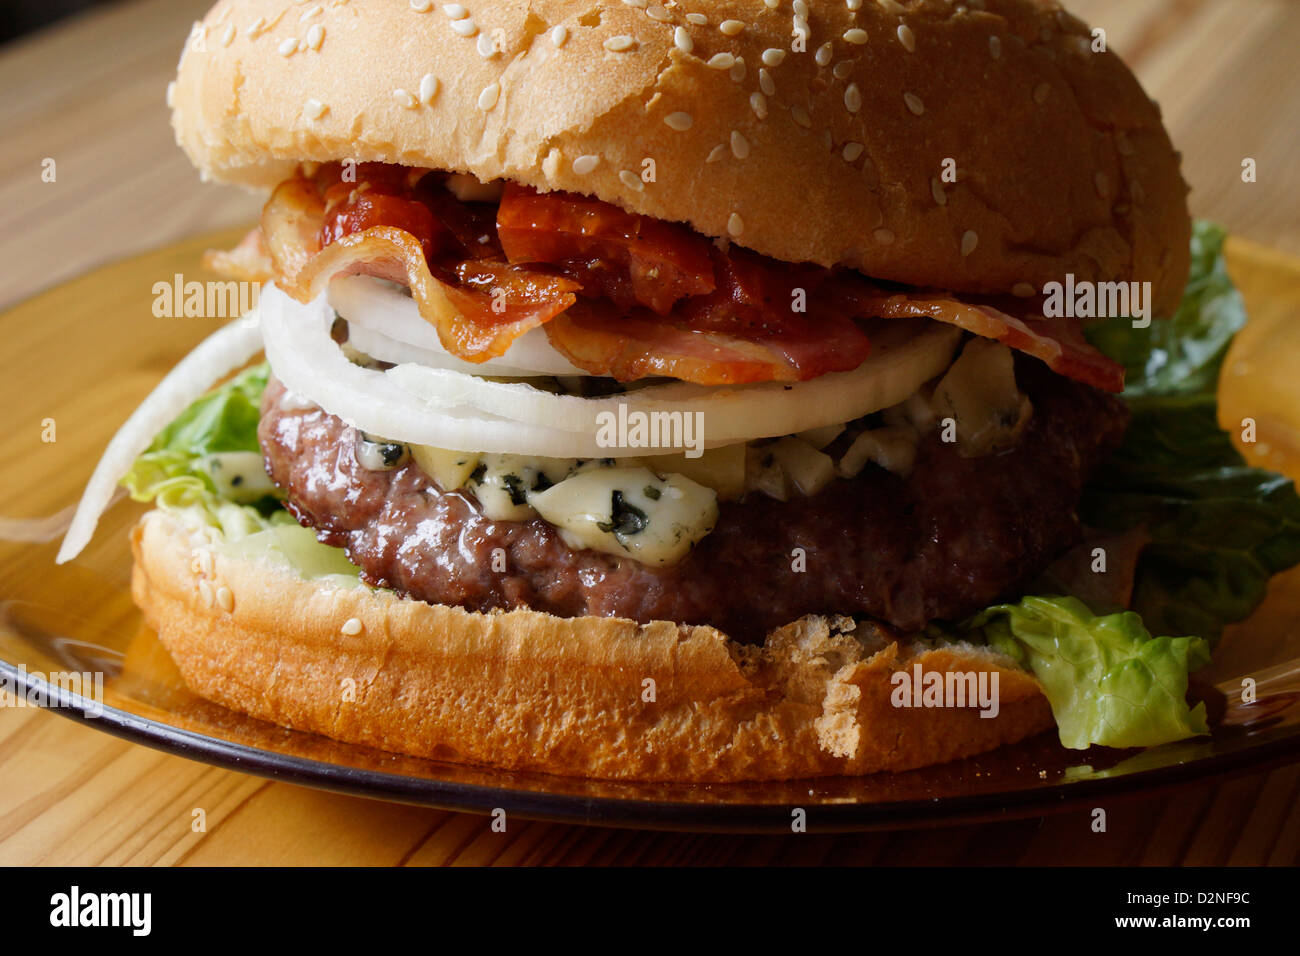 hamburger cheese bacon junk food fast delicious calorie unhealthy greasy Stock Photo